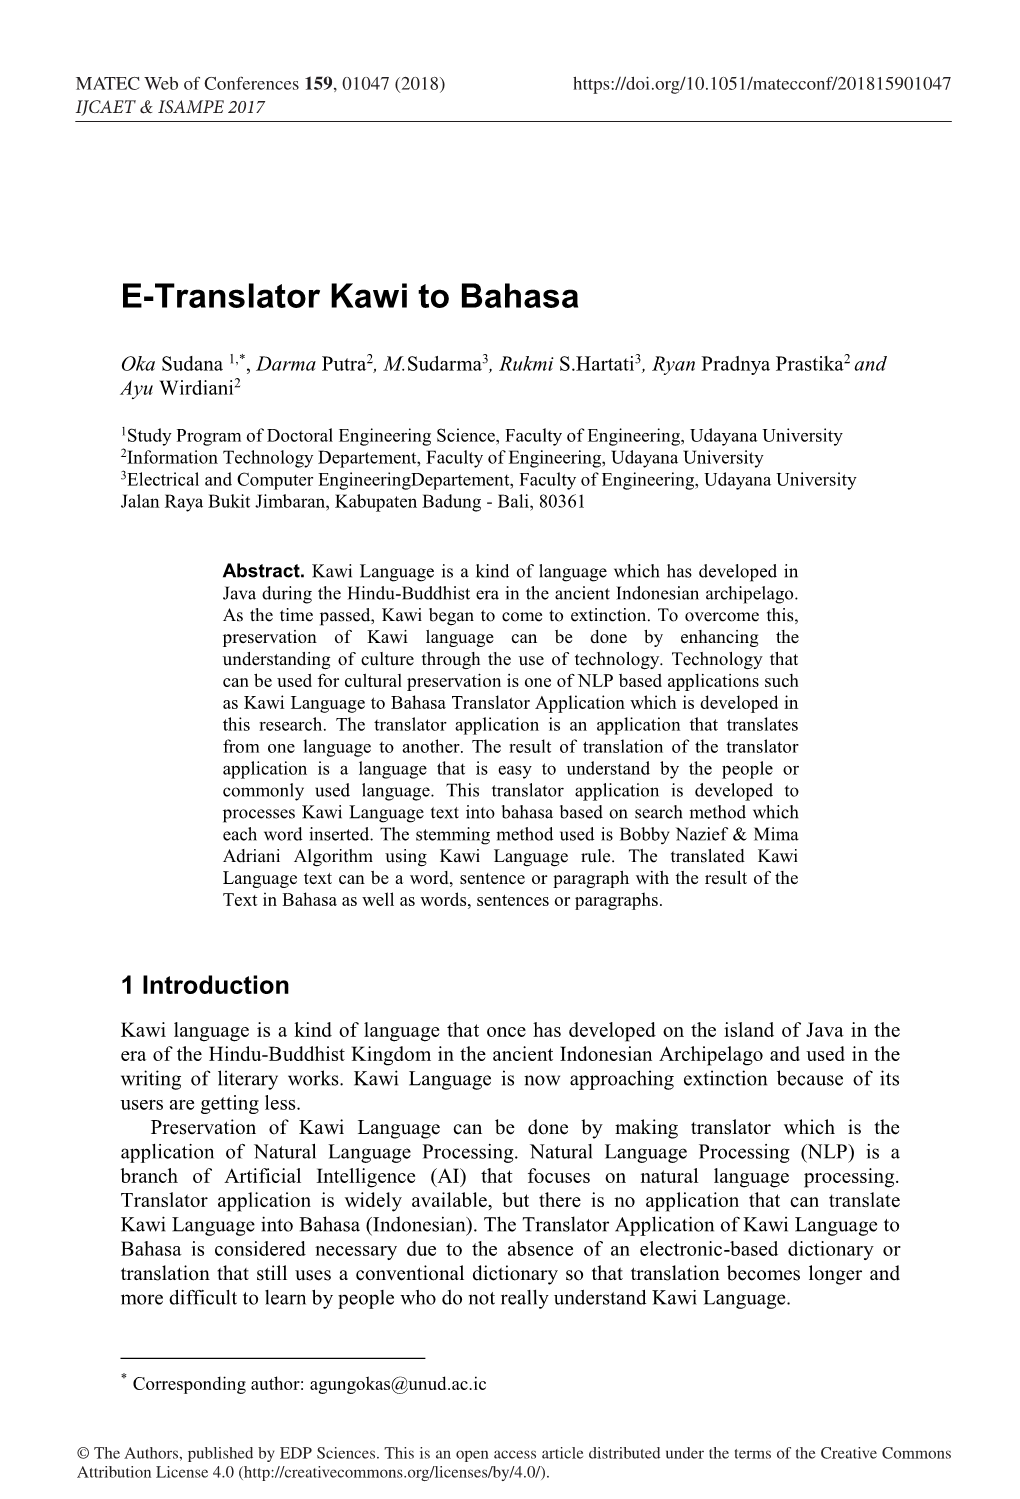 E-Translator Kawi to Bahasa